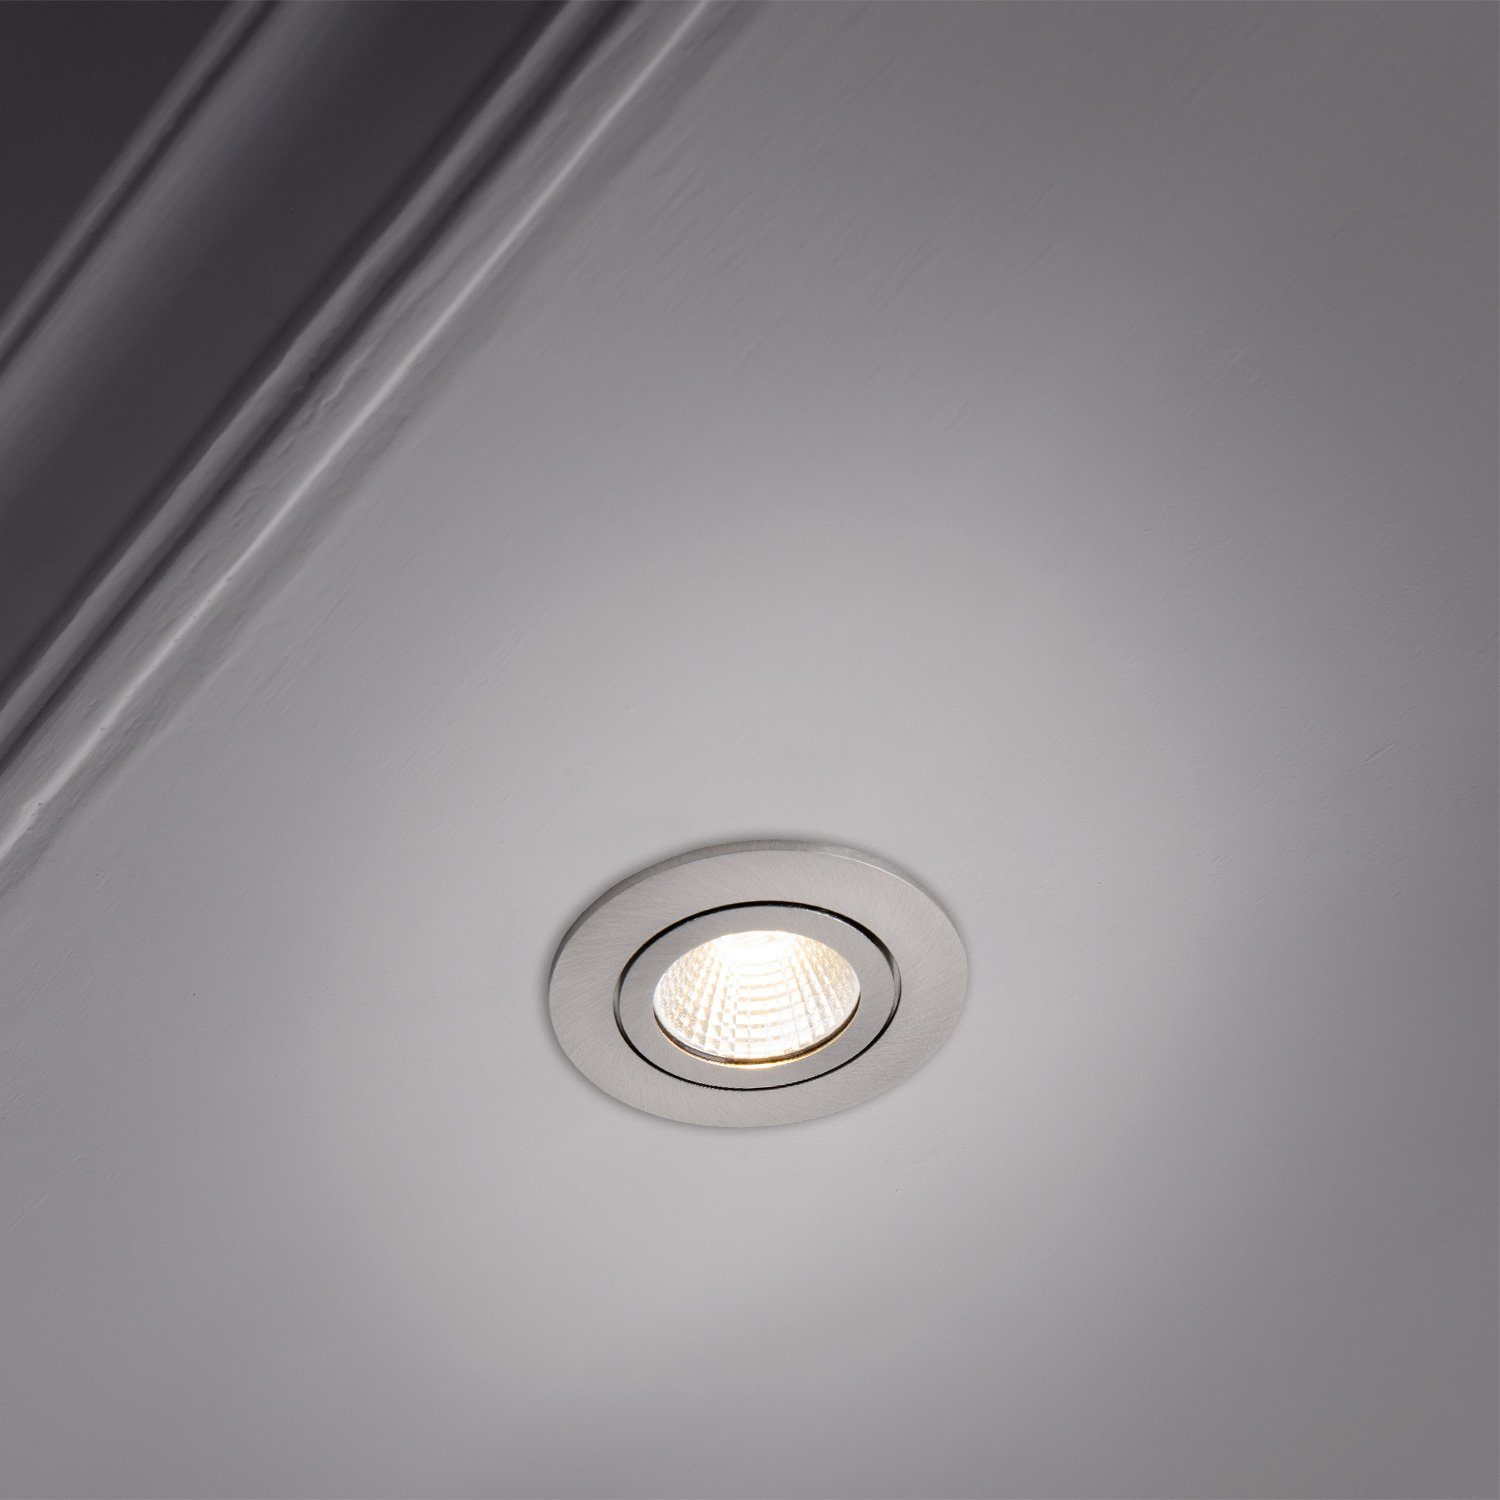 Paco Home Einbauleuchte Warmweiß, LED Spotlight dimmbar Schwenkbar Rita, Einbaustrahler Flach Strahler wechselbar, LED LED